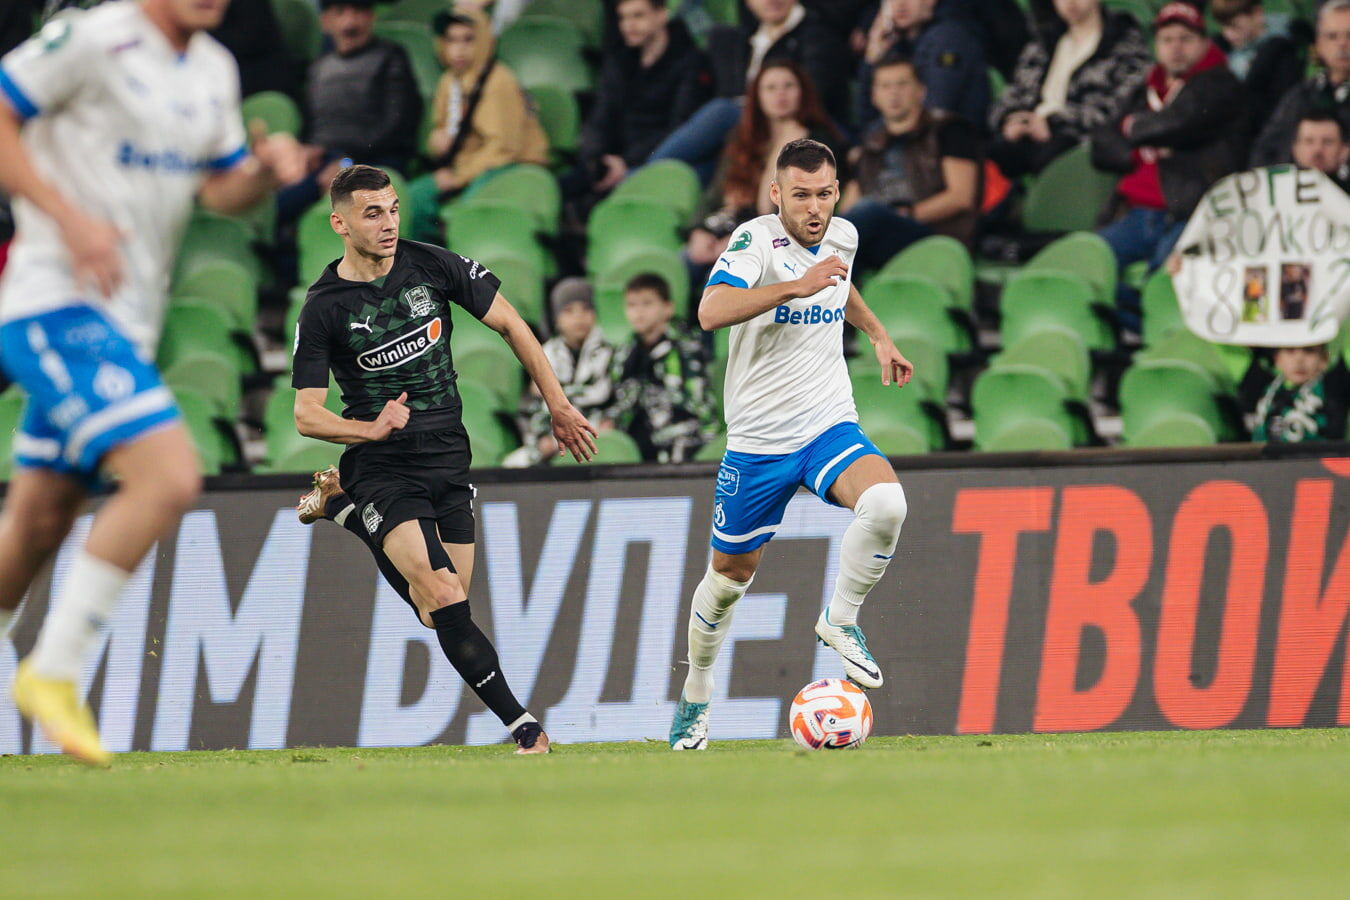 Photo gallery from RPL away game at Krasnodar